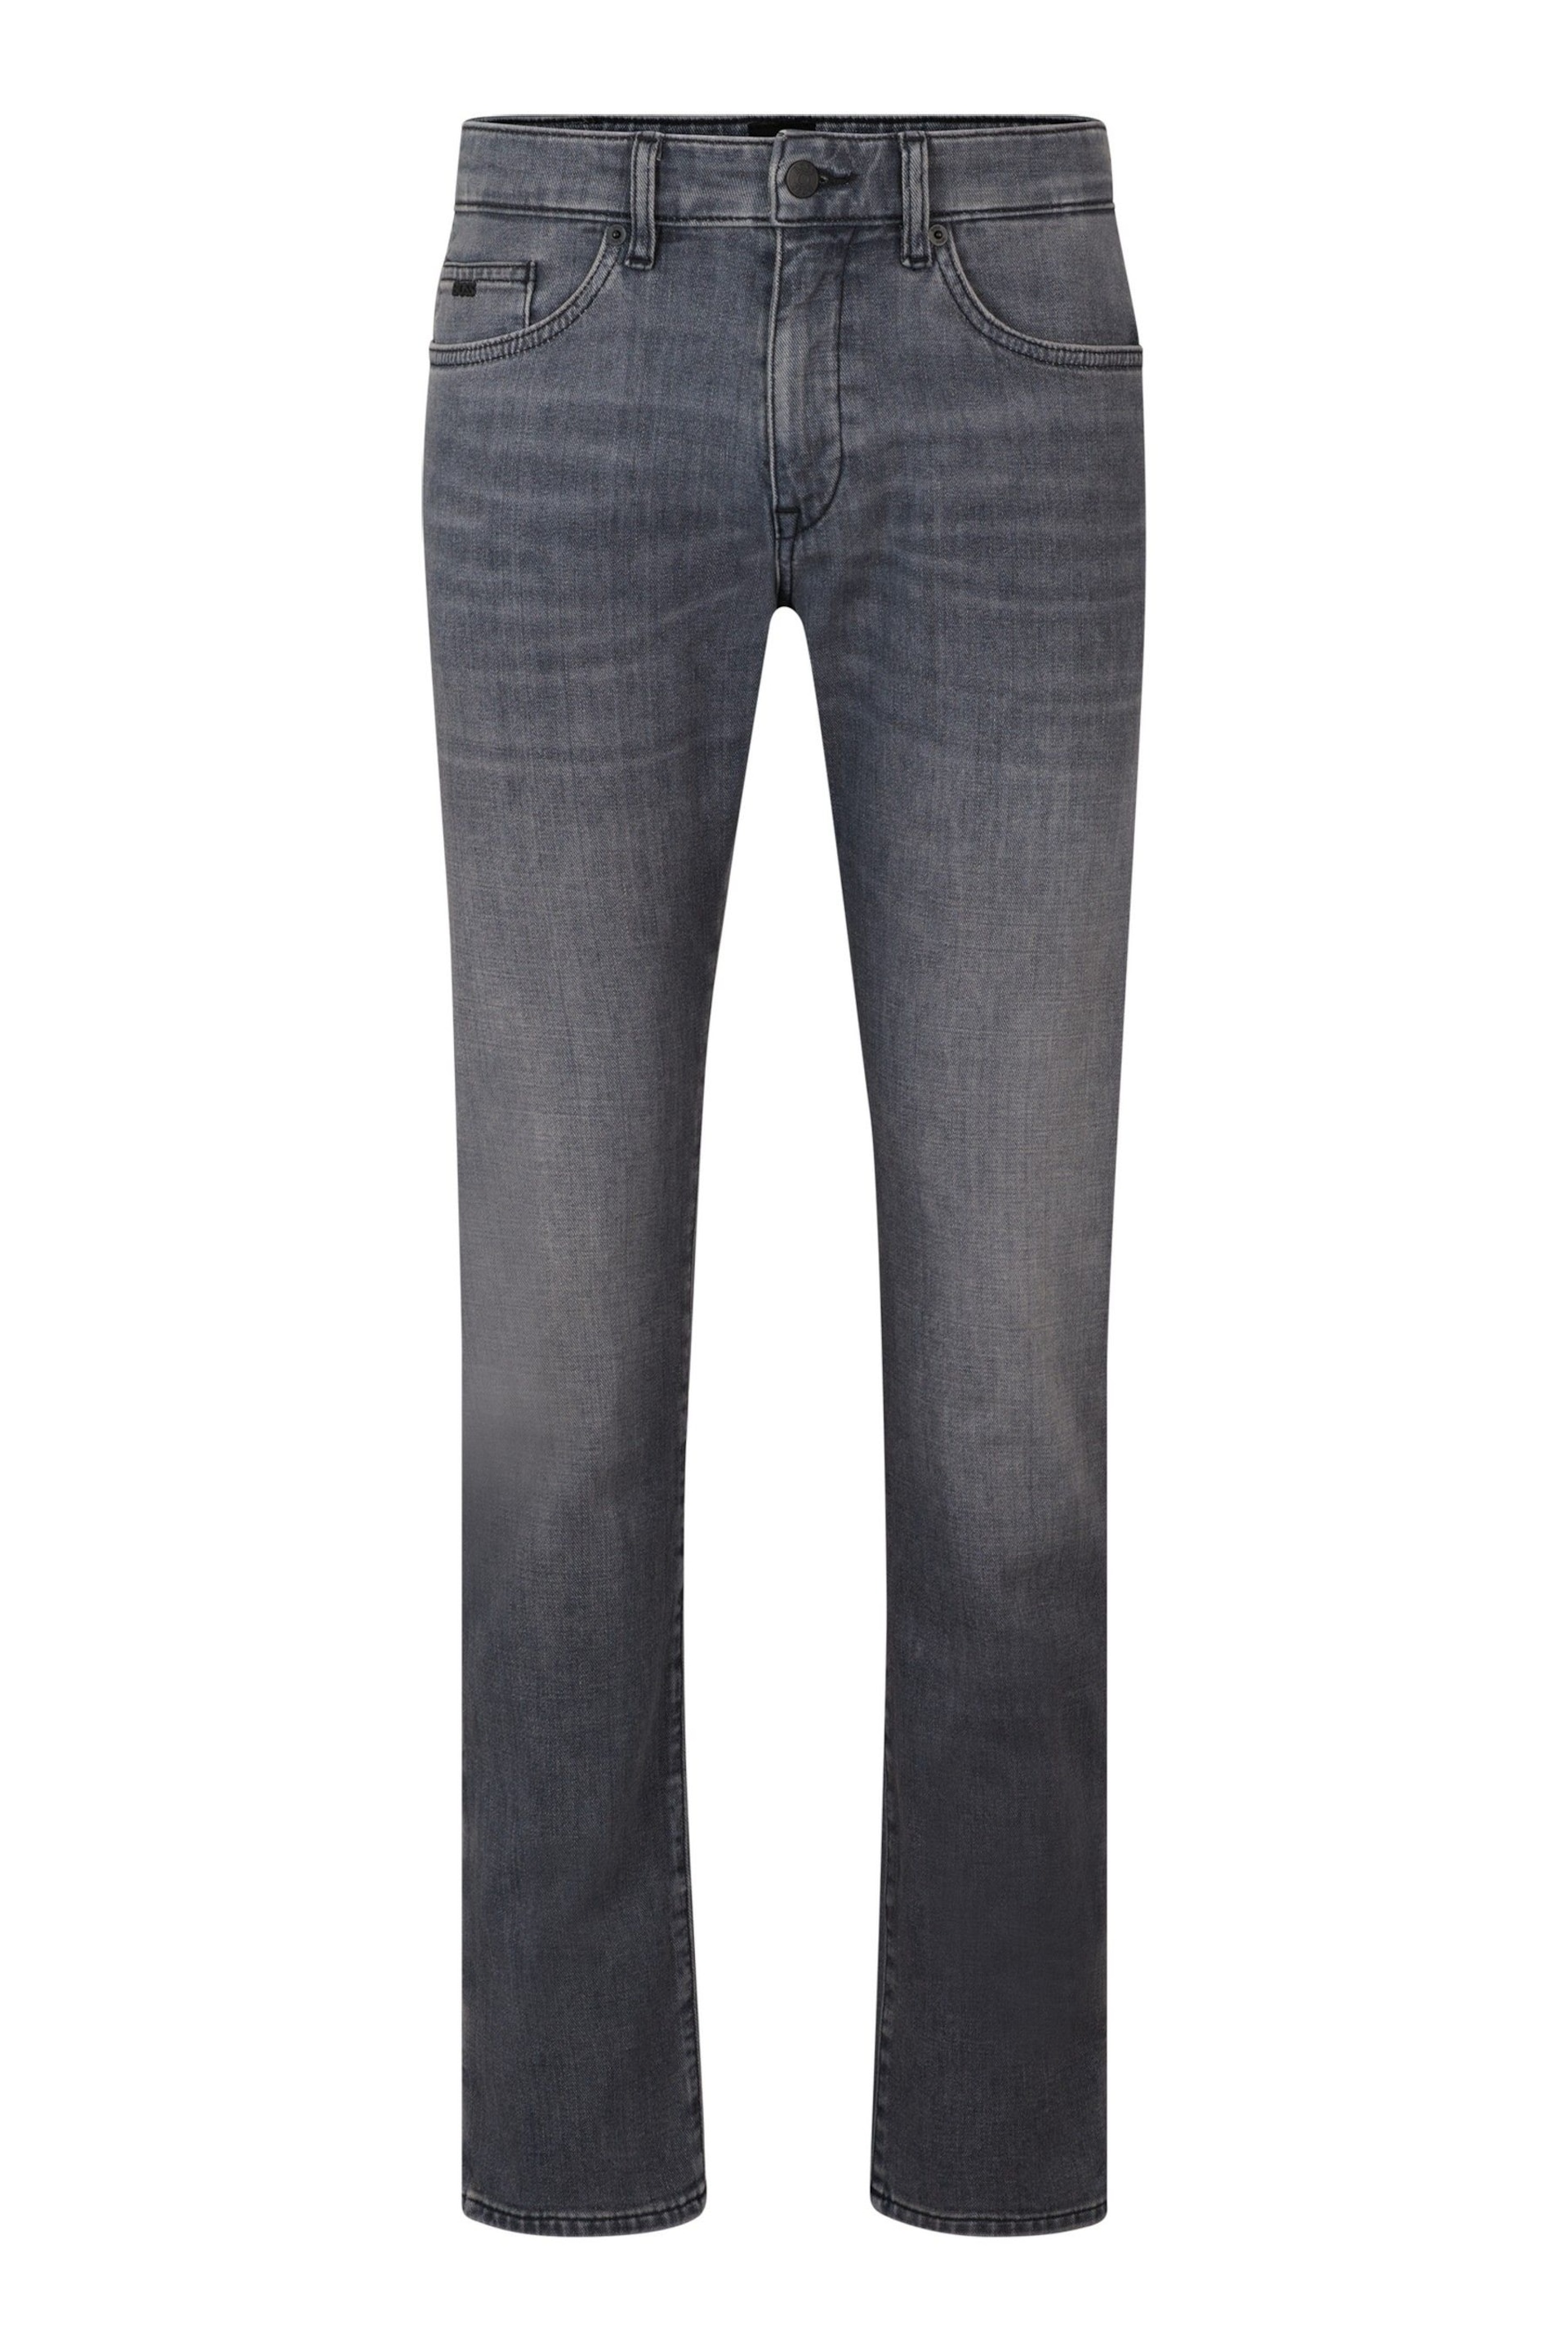 BOSS Grey Delaware Slim Fit Jeans - Image 5 of 5